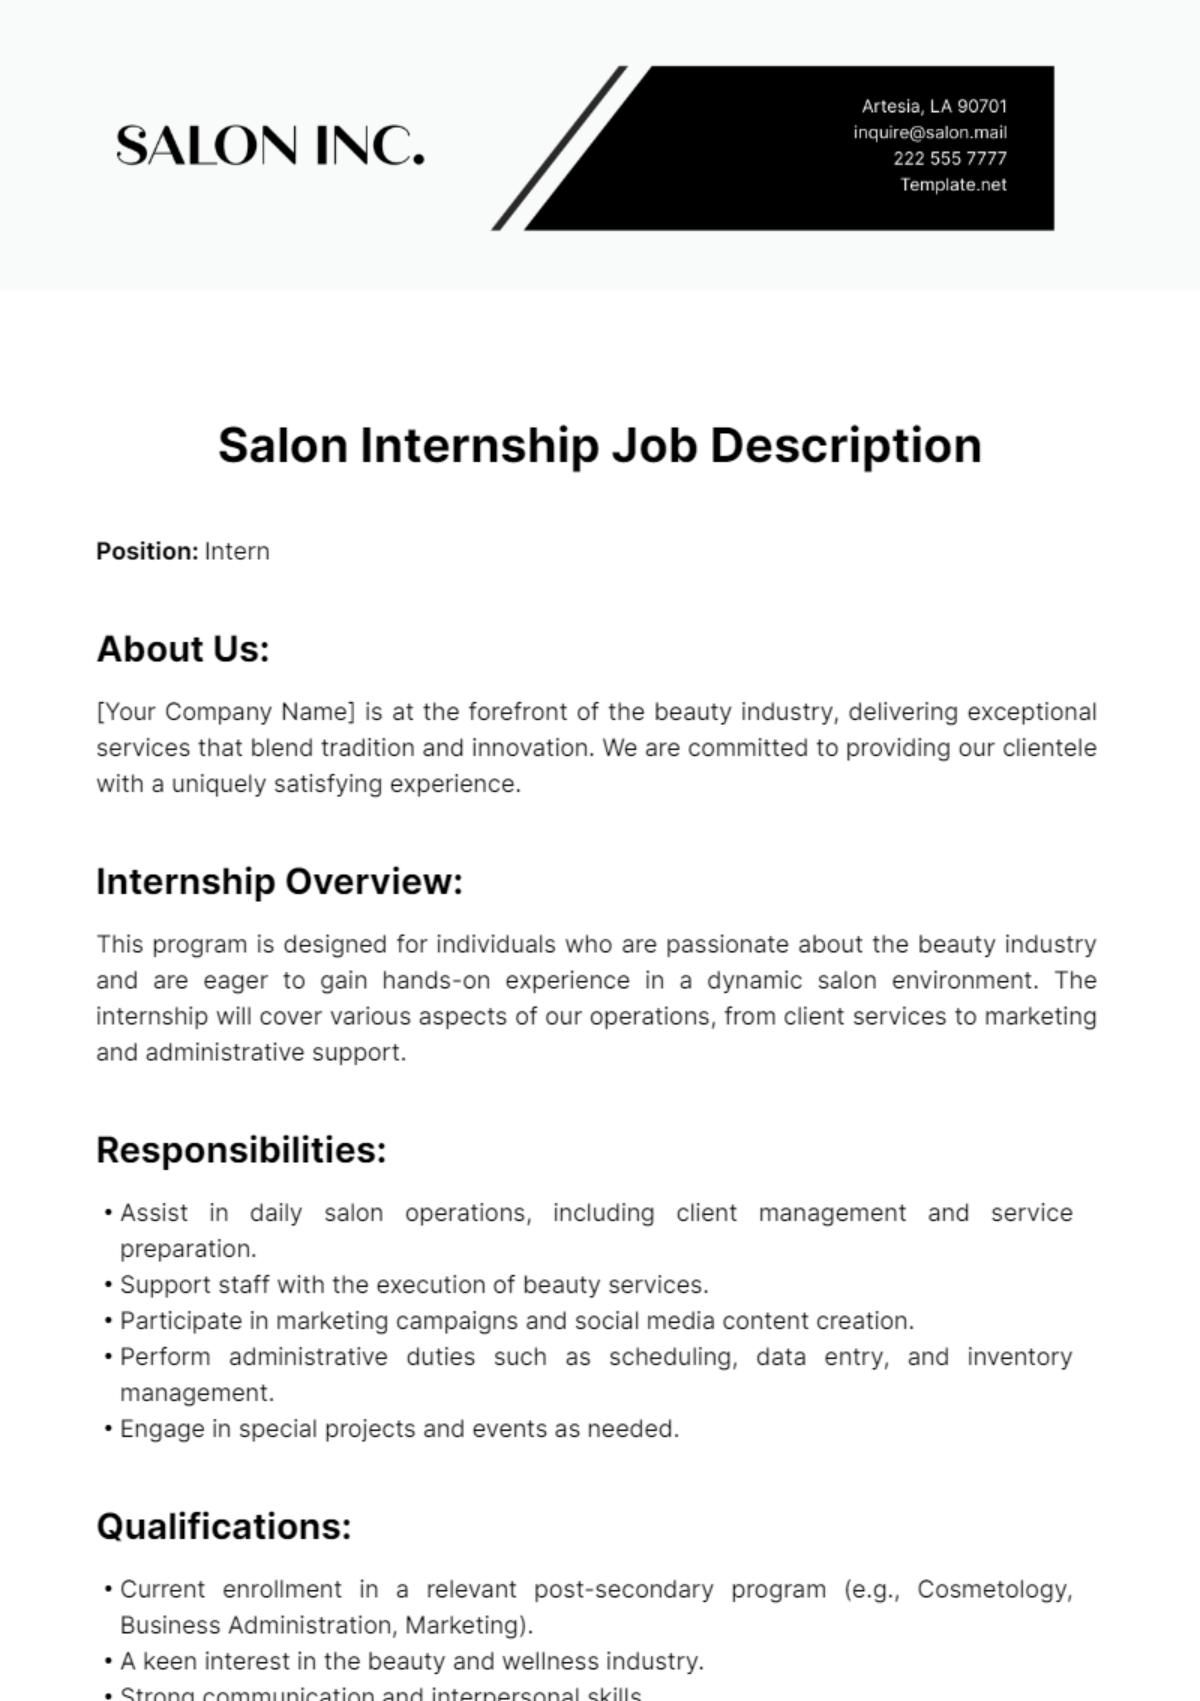 Salon Internship Job Description Template